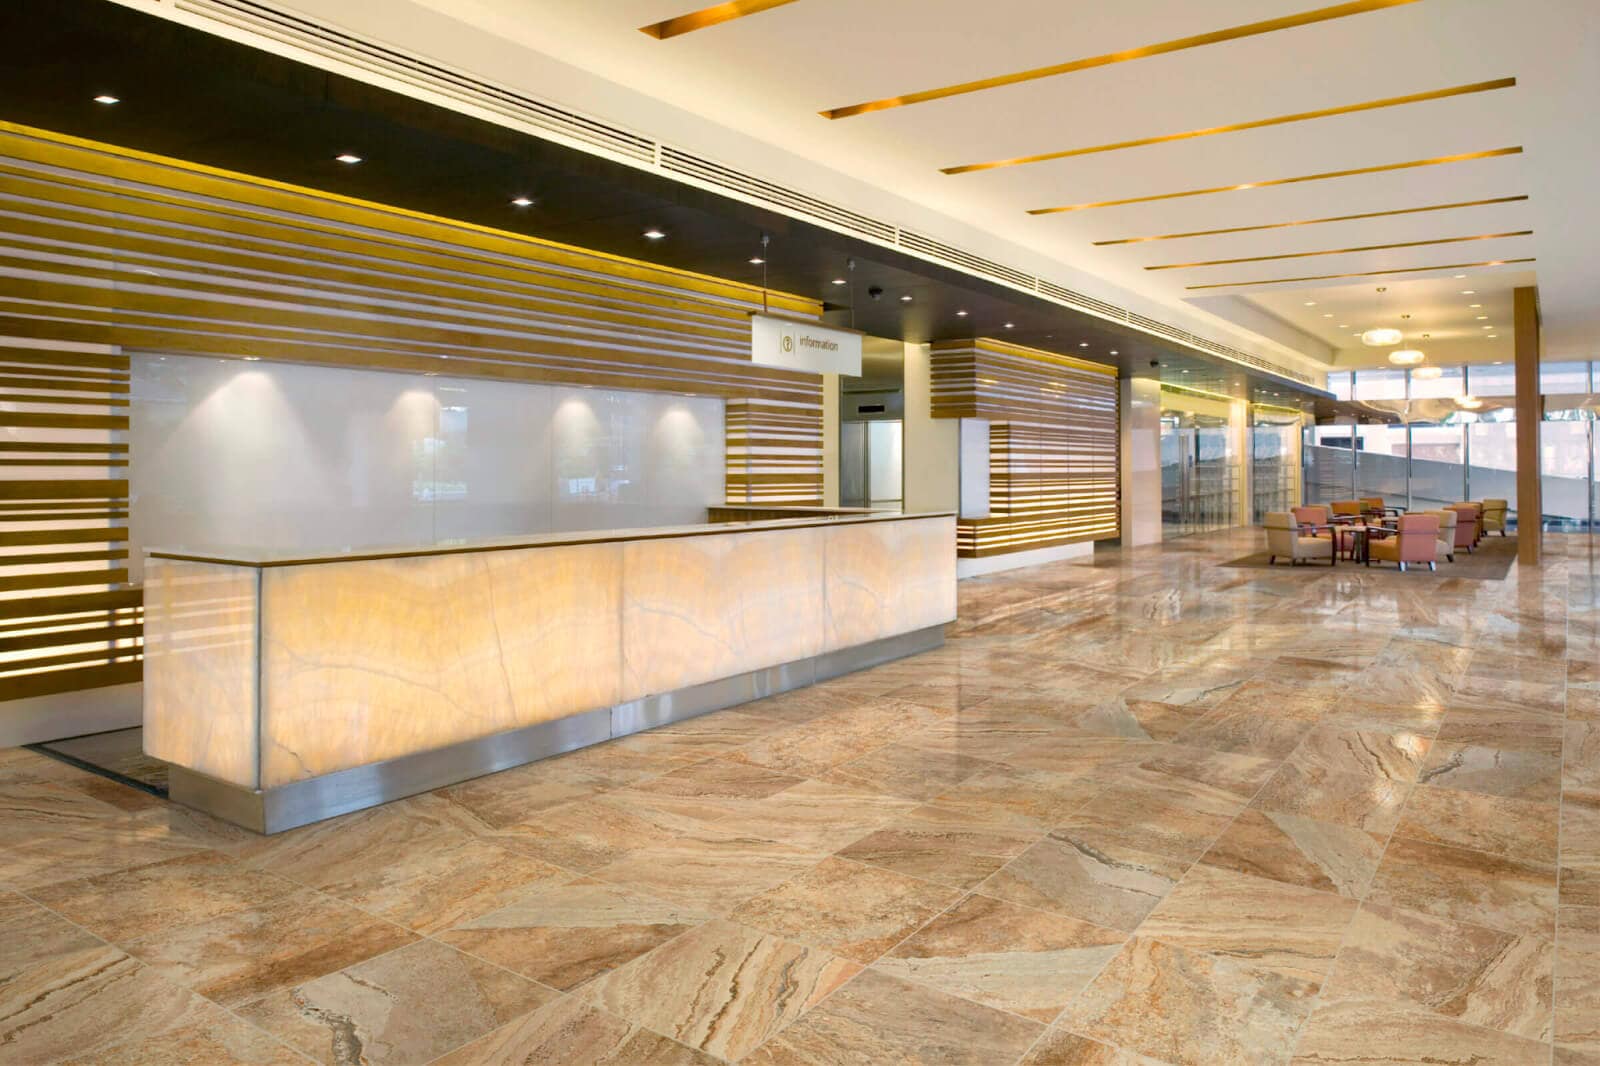 Hotel lobby with ceramic tile flooring